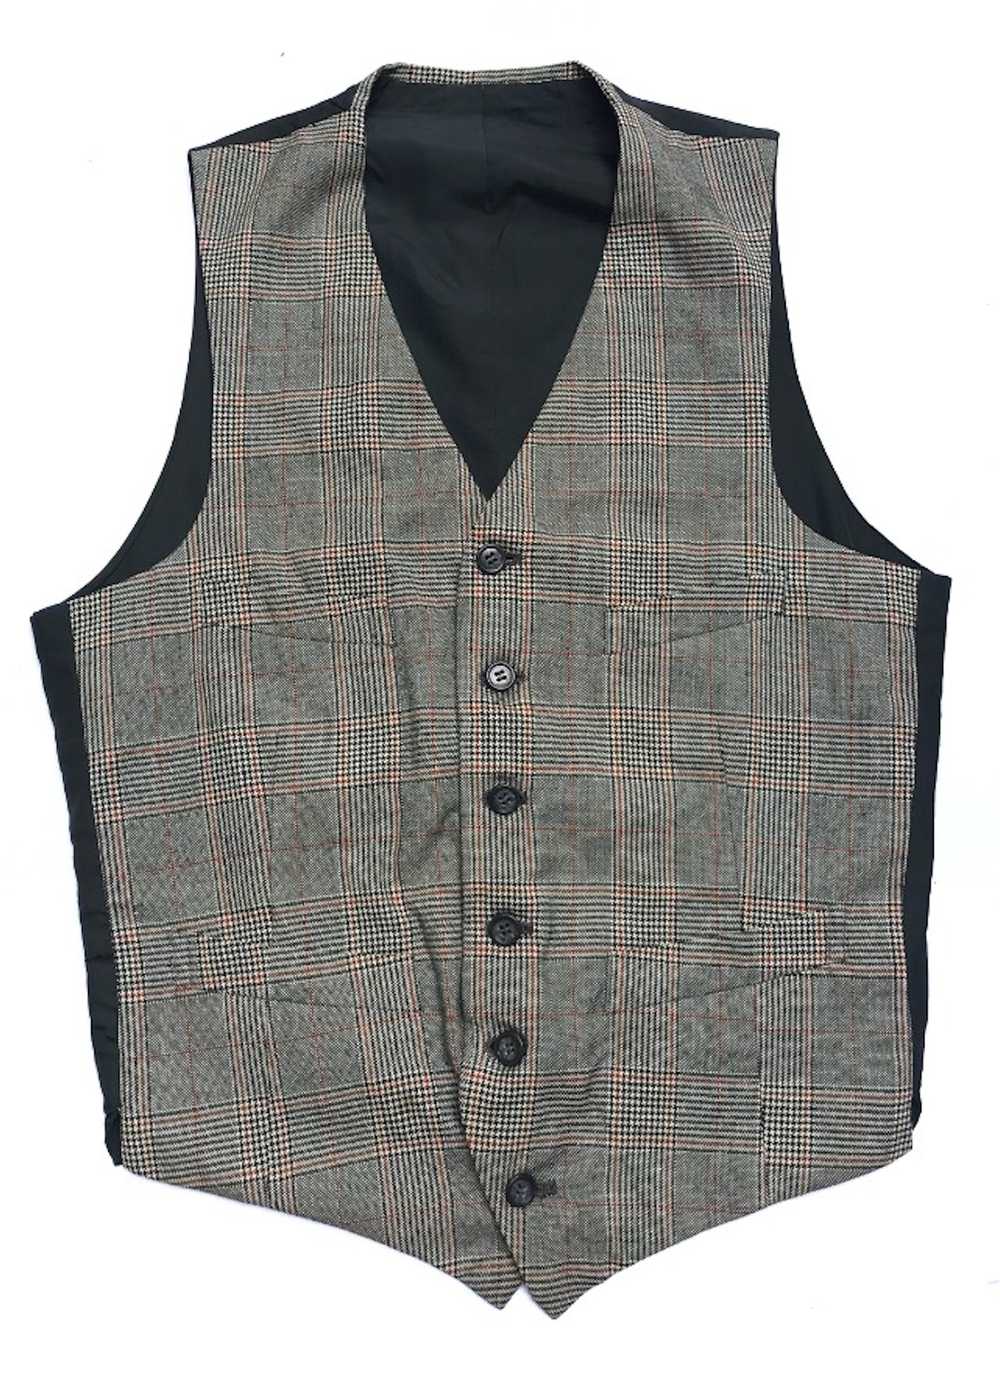 Japanese Brand × Other Unbranded vest(S) - image 1